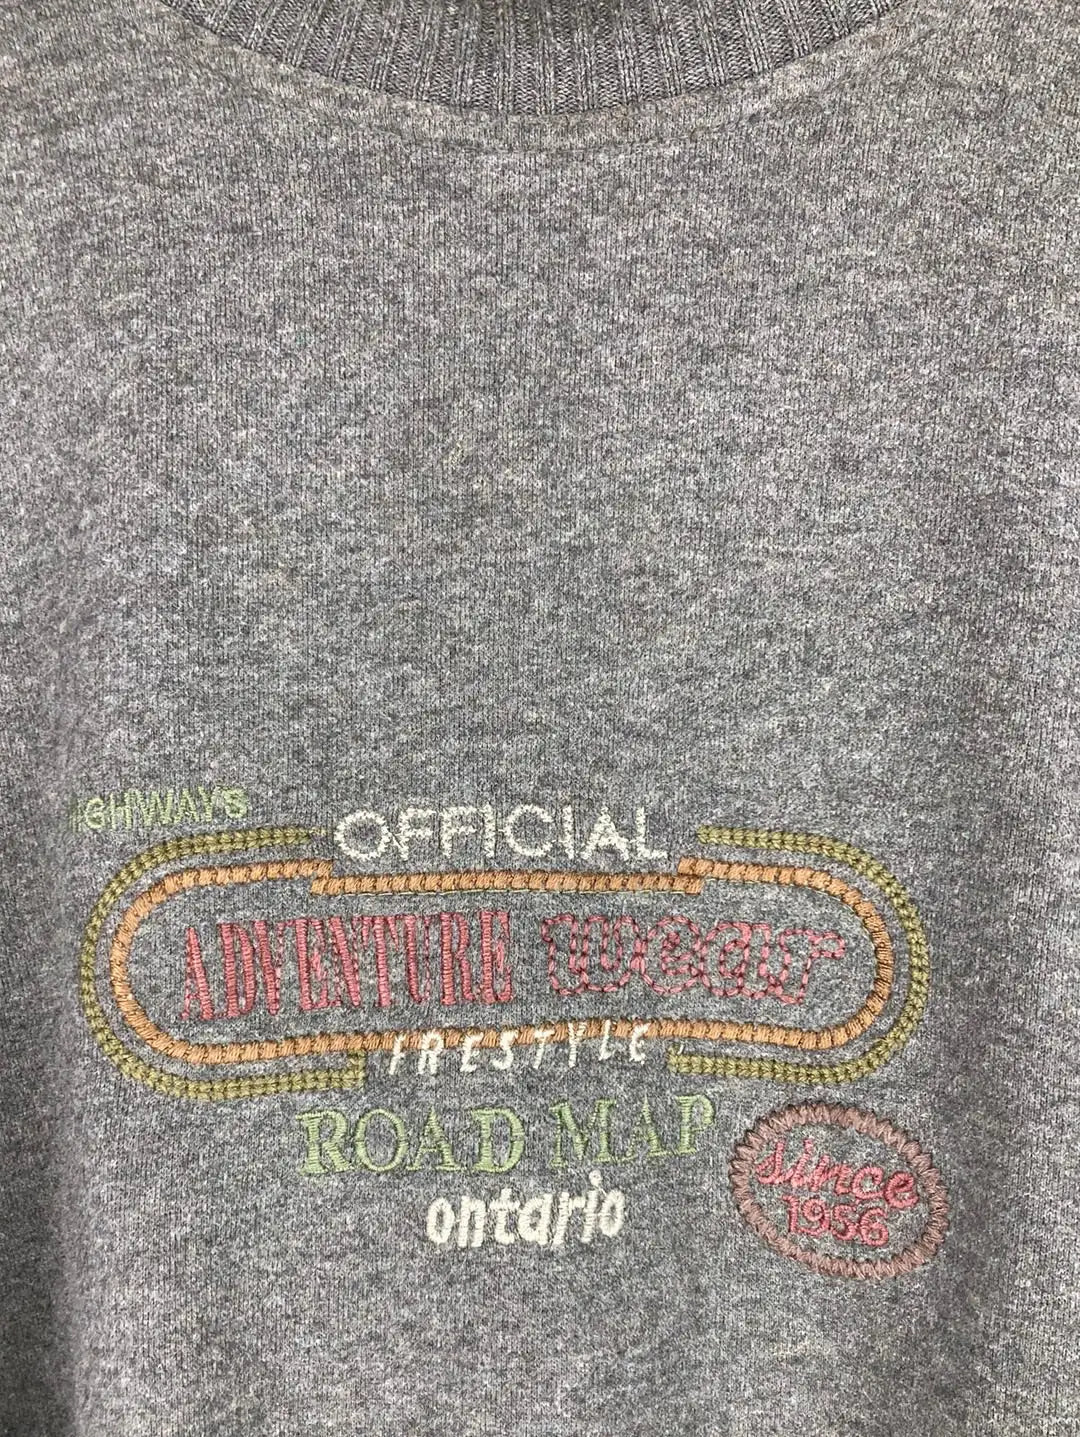 "Ontario" Sweater (M)